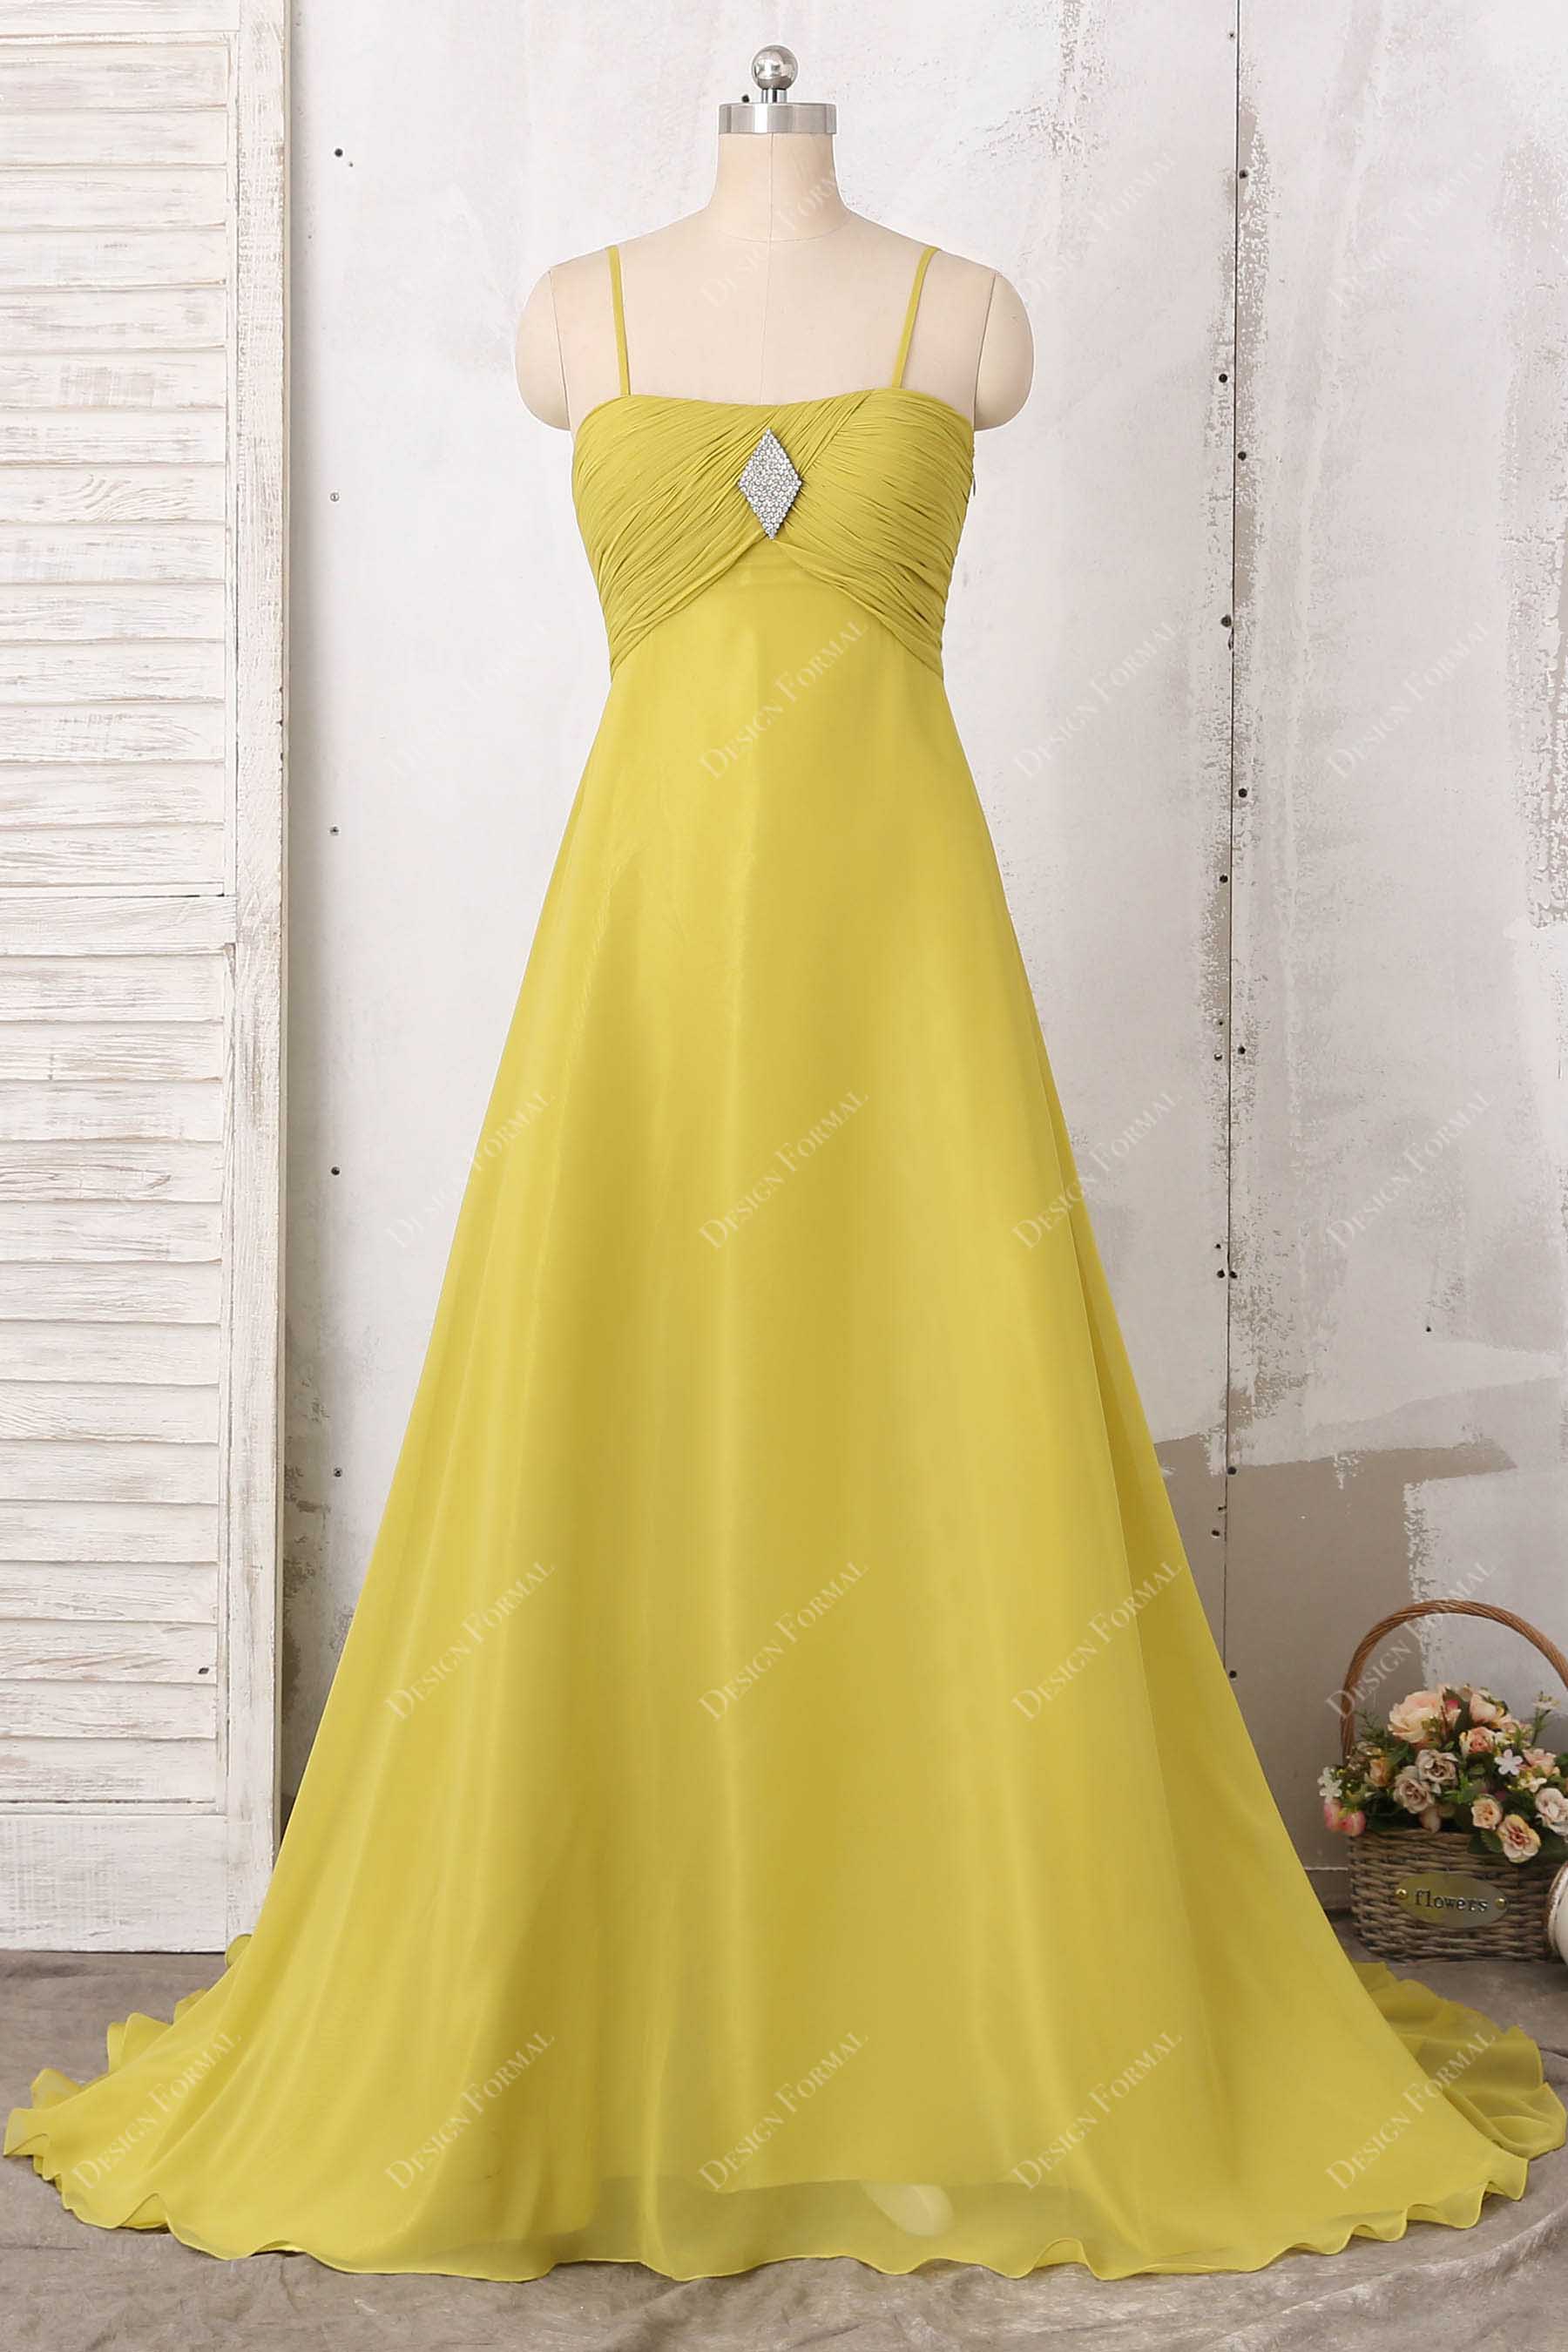 ginger yellow chiffon empire waist bridesmaid dress 